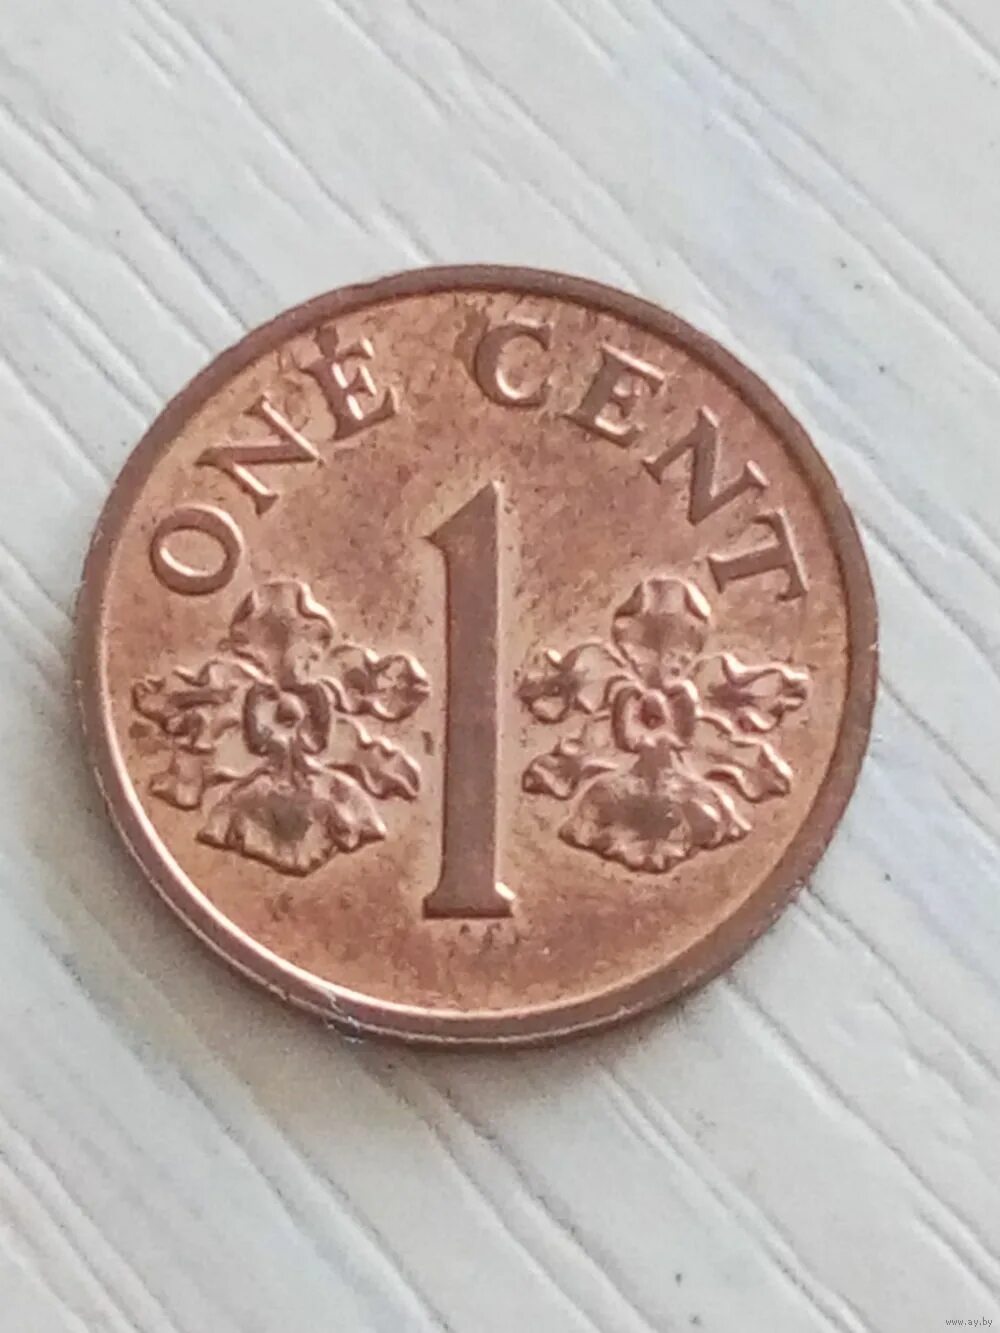 1 cent. Один цент. Цент монета. Один цент монета. Монеты изображения цент.